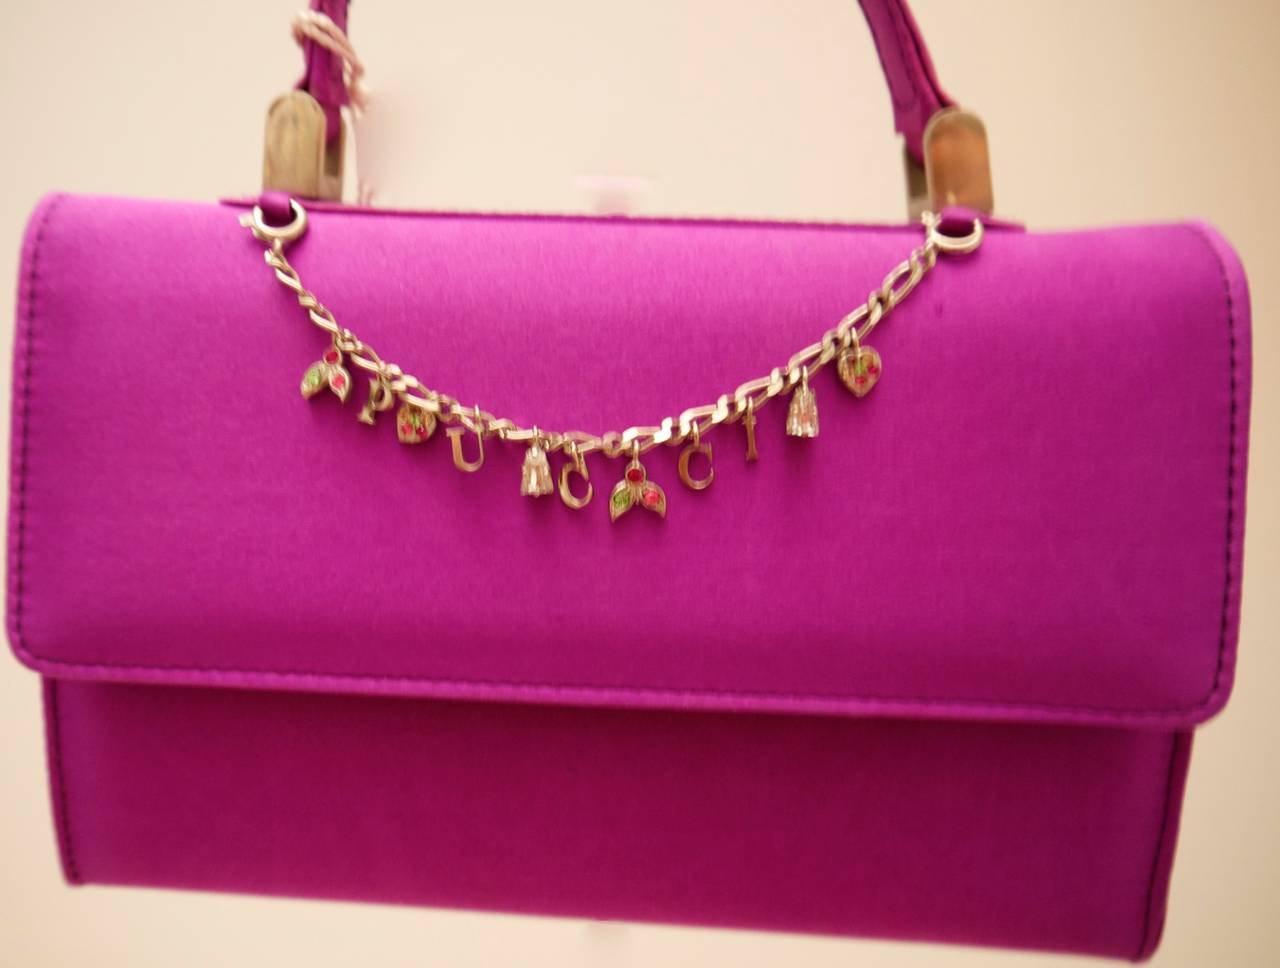 Red Emilio Pucci Fabric Runway Handbag with Chain of Charms - Fuchsia